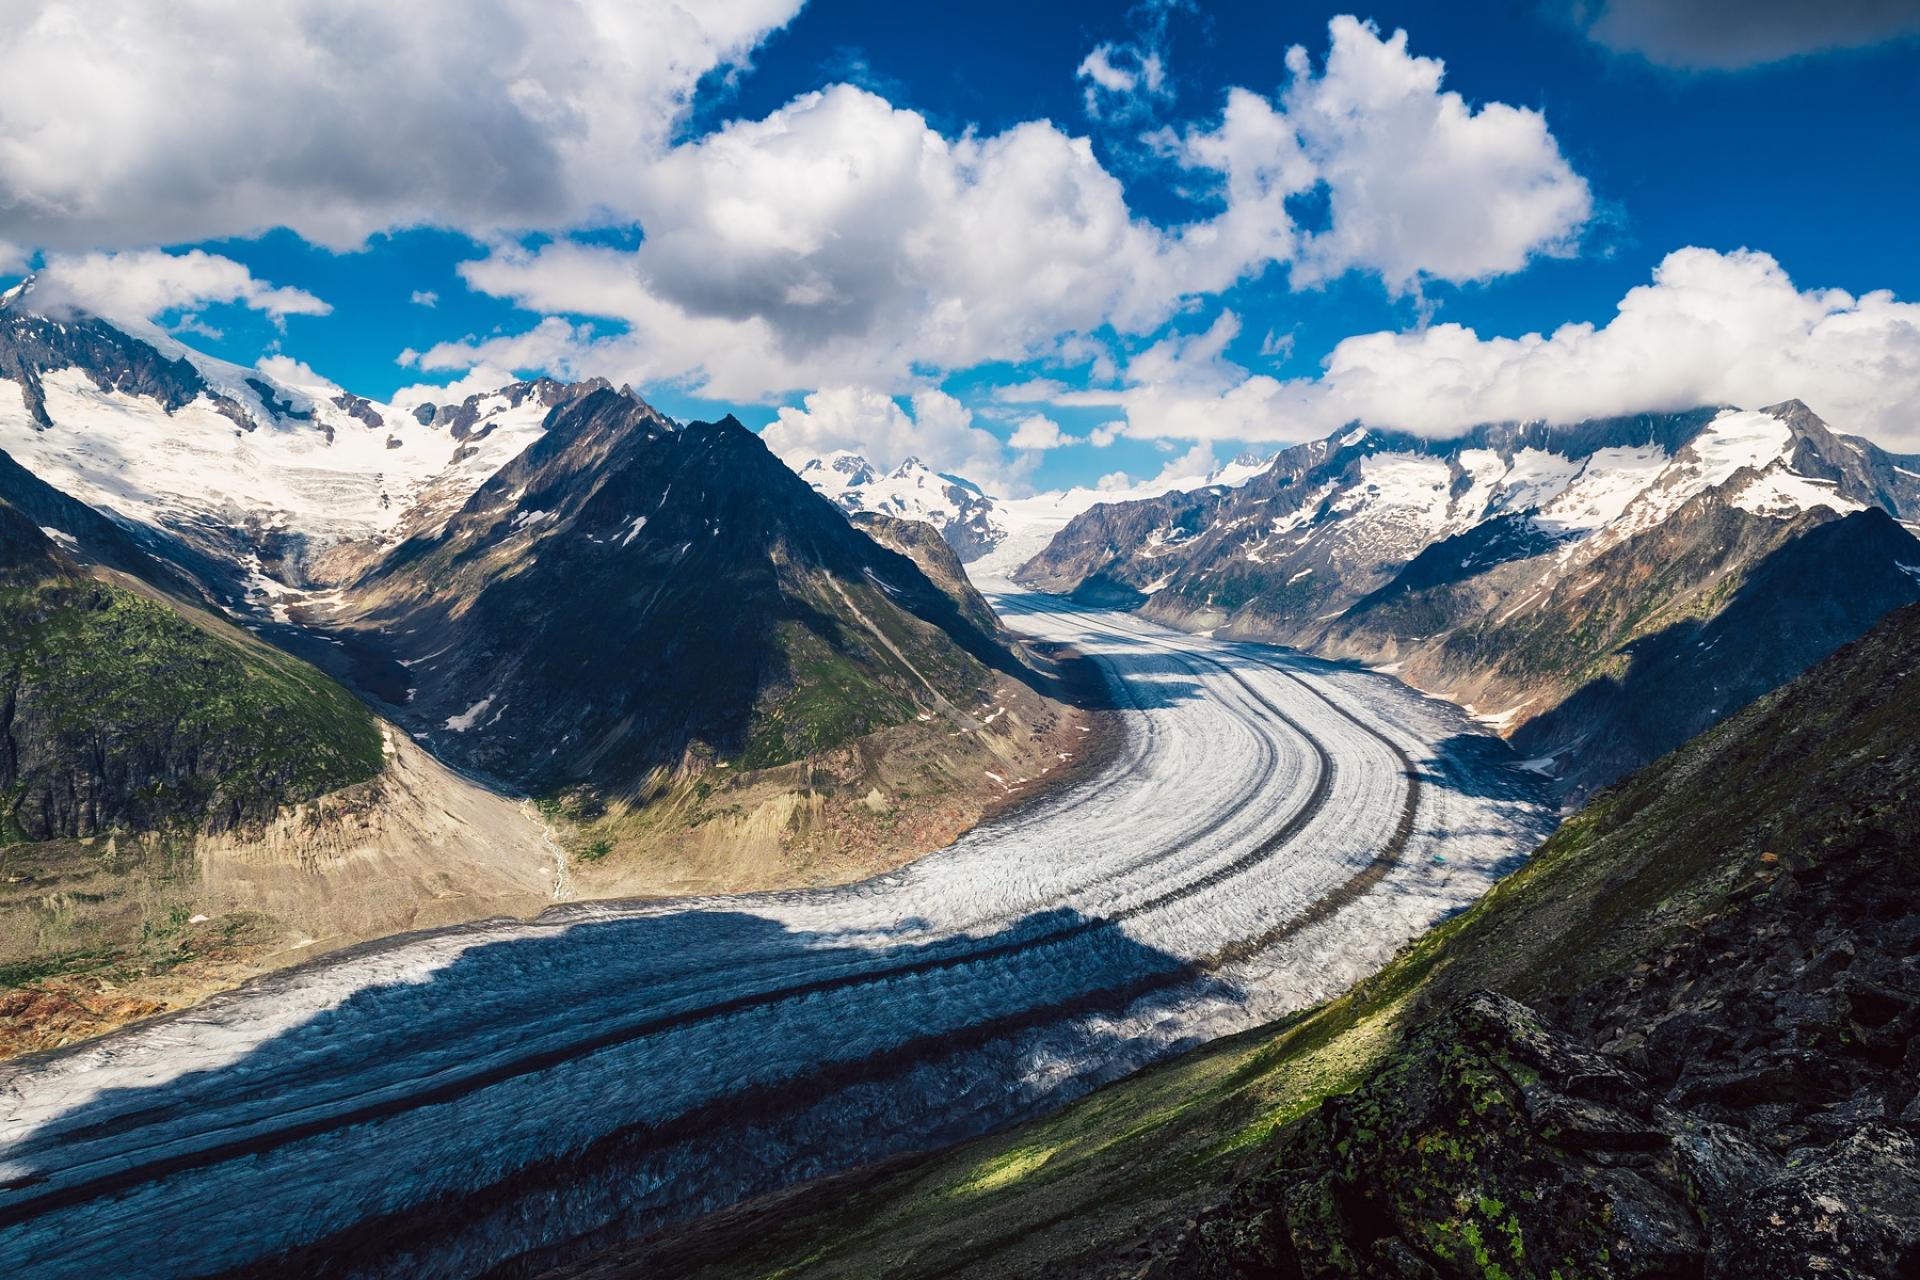 Glacier in the alps